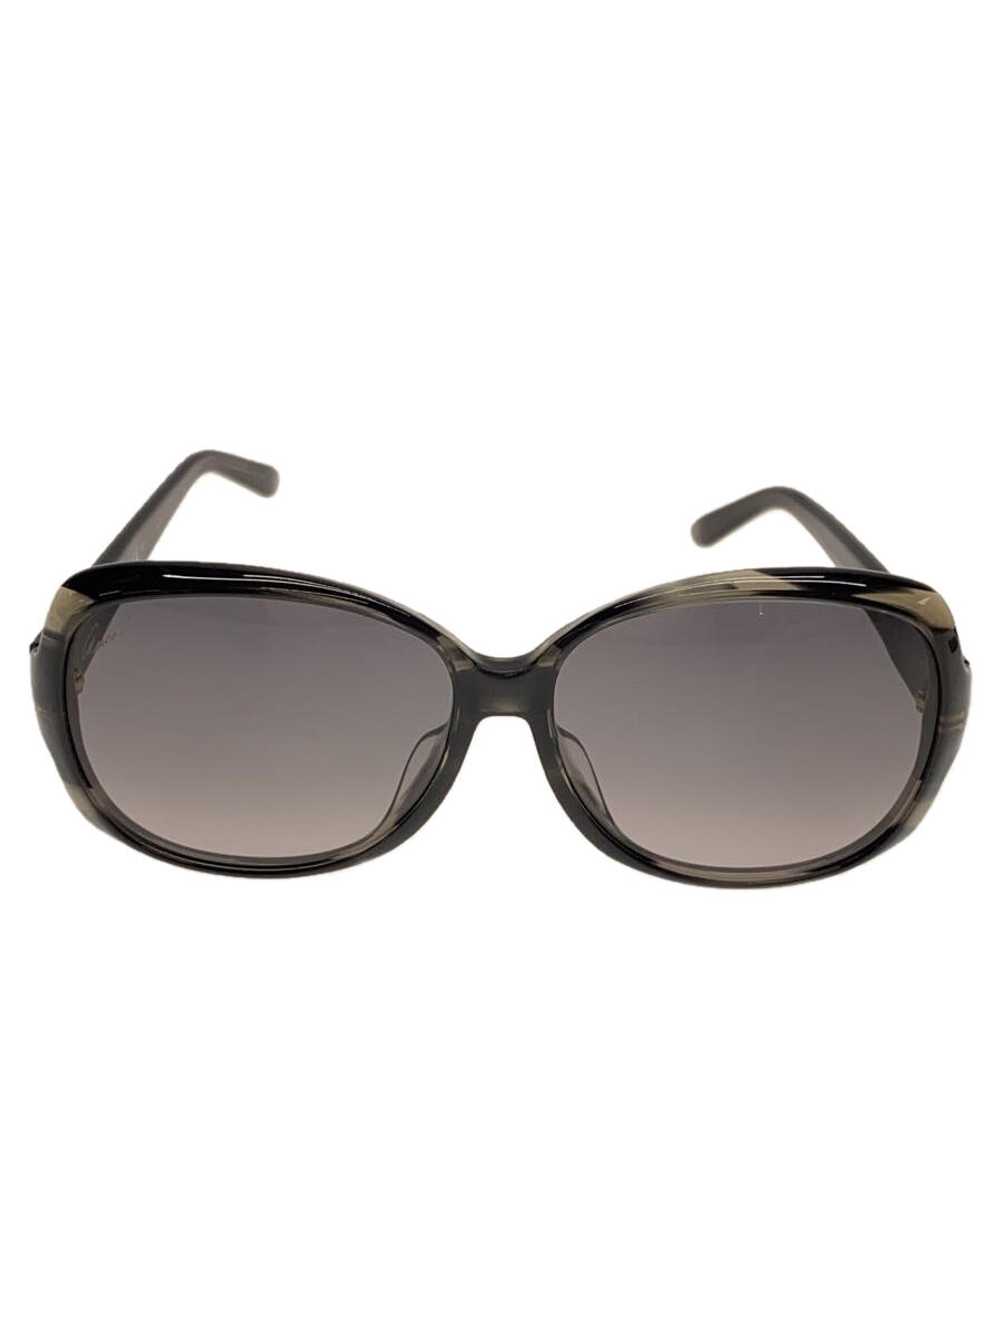 Used Gucci Sunglasses/Blk/Black/Ladies/Gg3596 - image 1